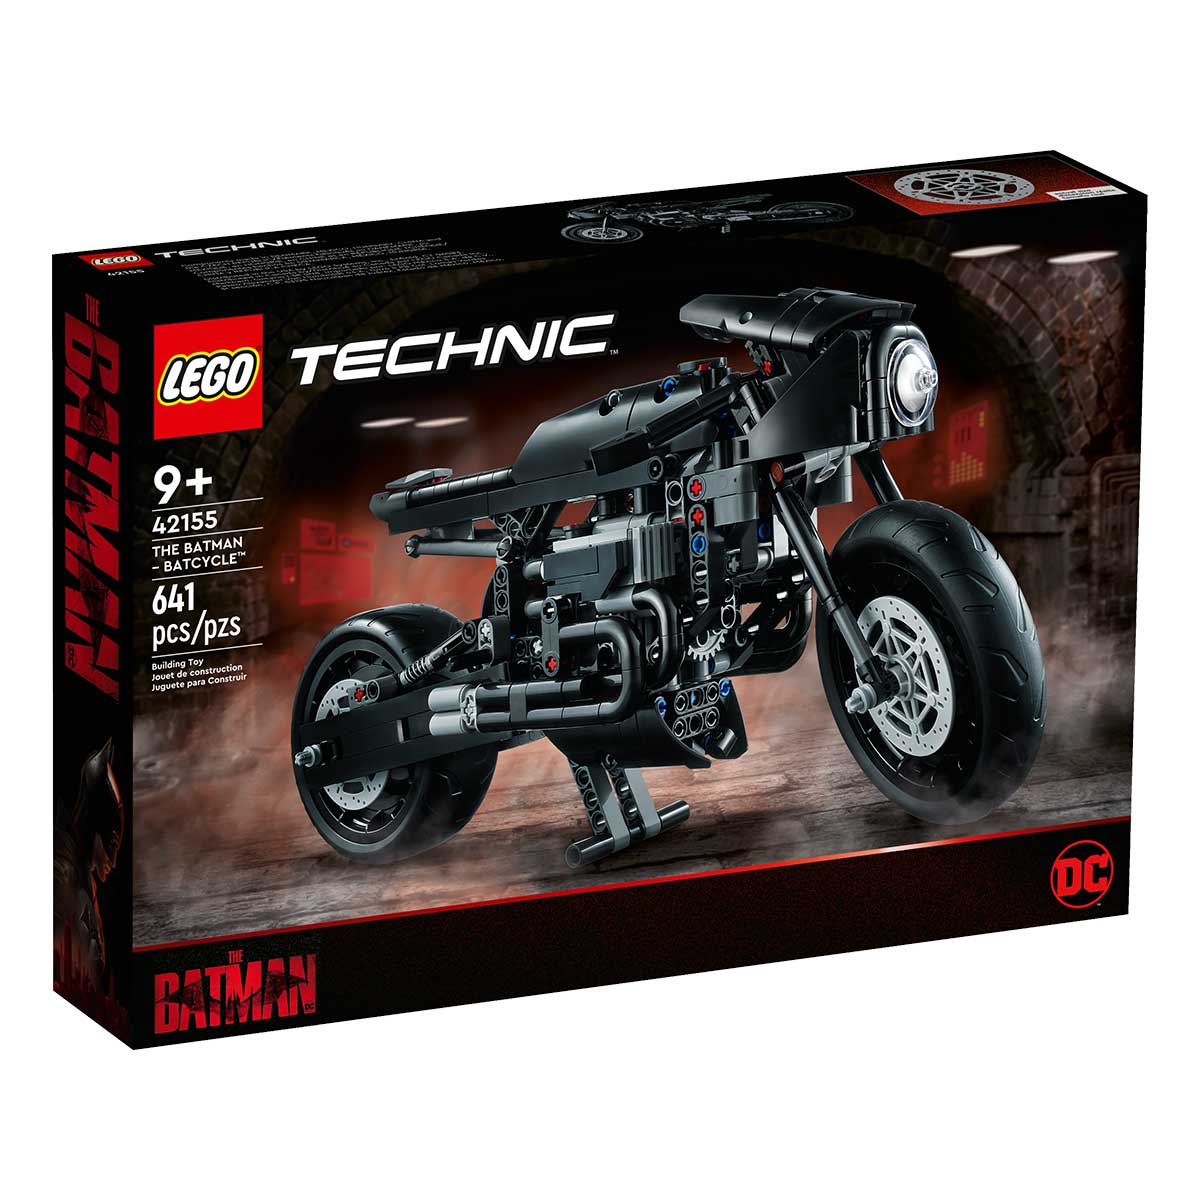 LEGO Technic - Moto do Batman Batcycle - 42155